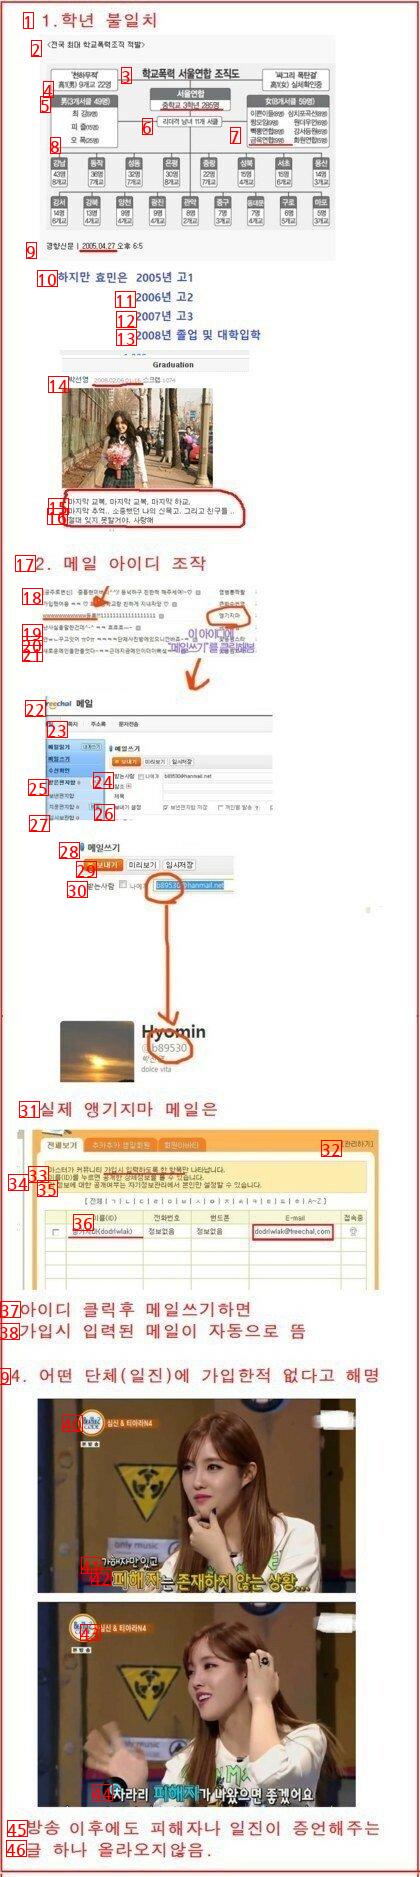 T-ara Hyomin explains various rumors.jpg